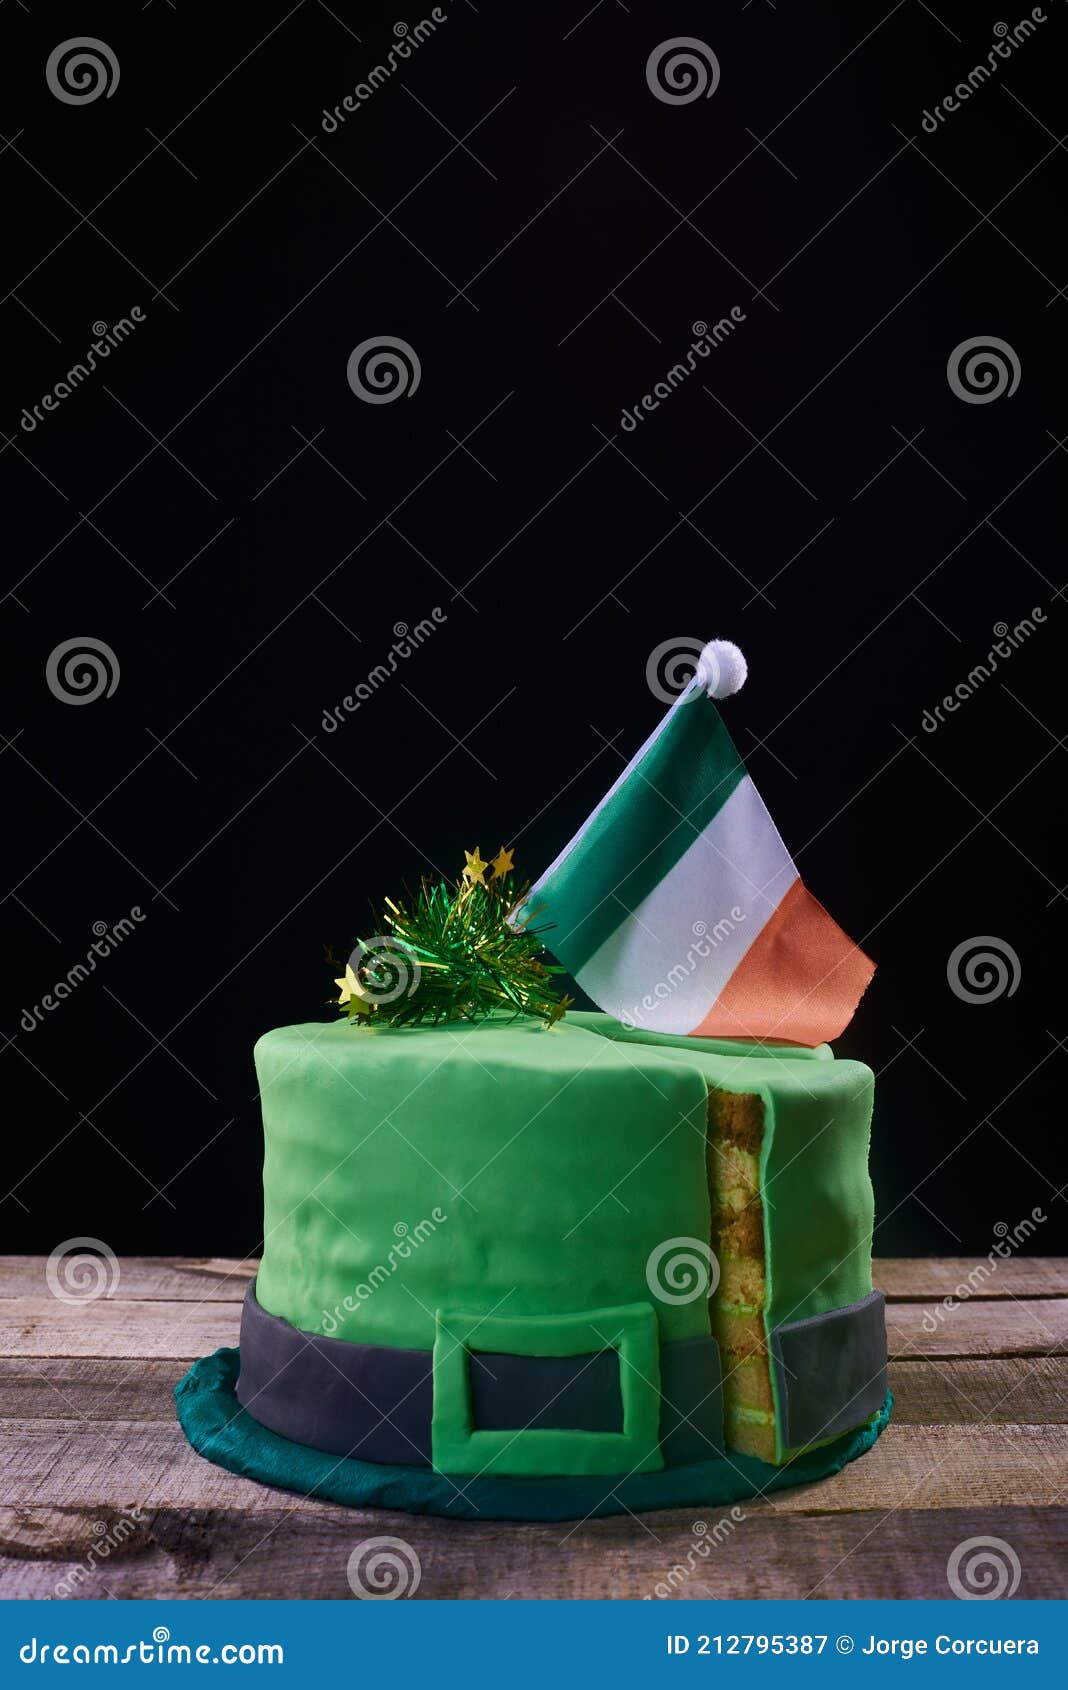 Irish Wedding Cake: A Memorable Way to Share Your Irish Side!